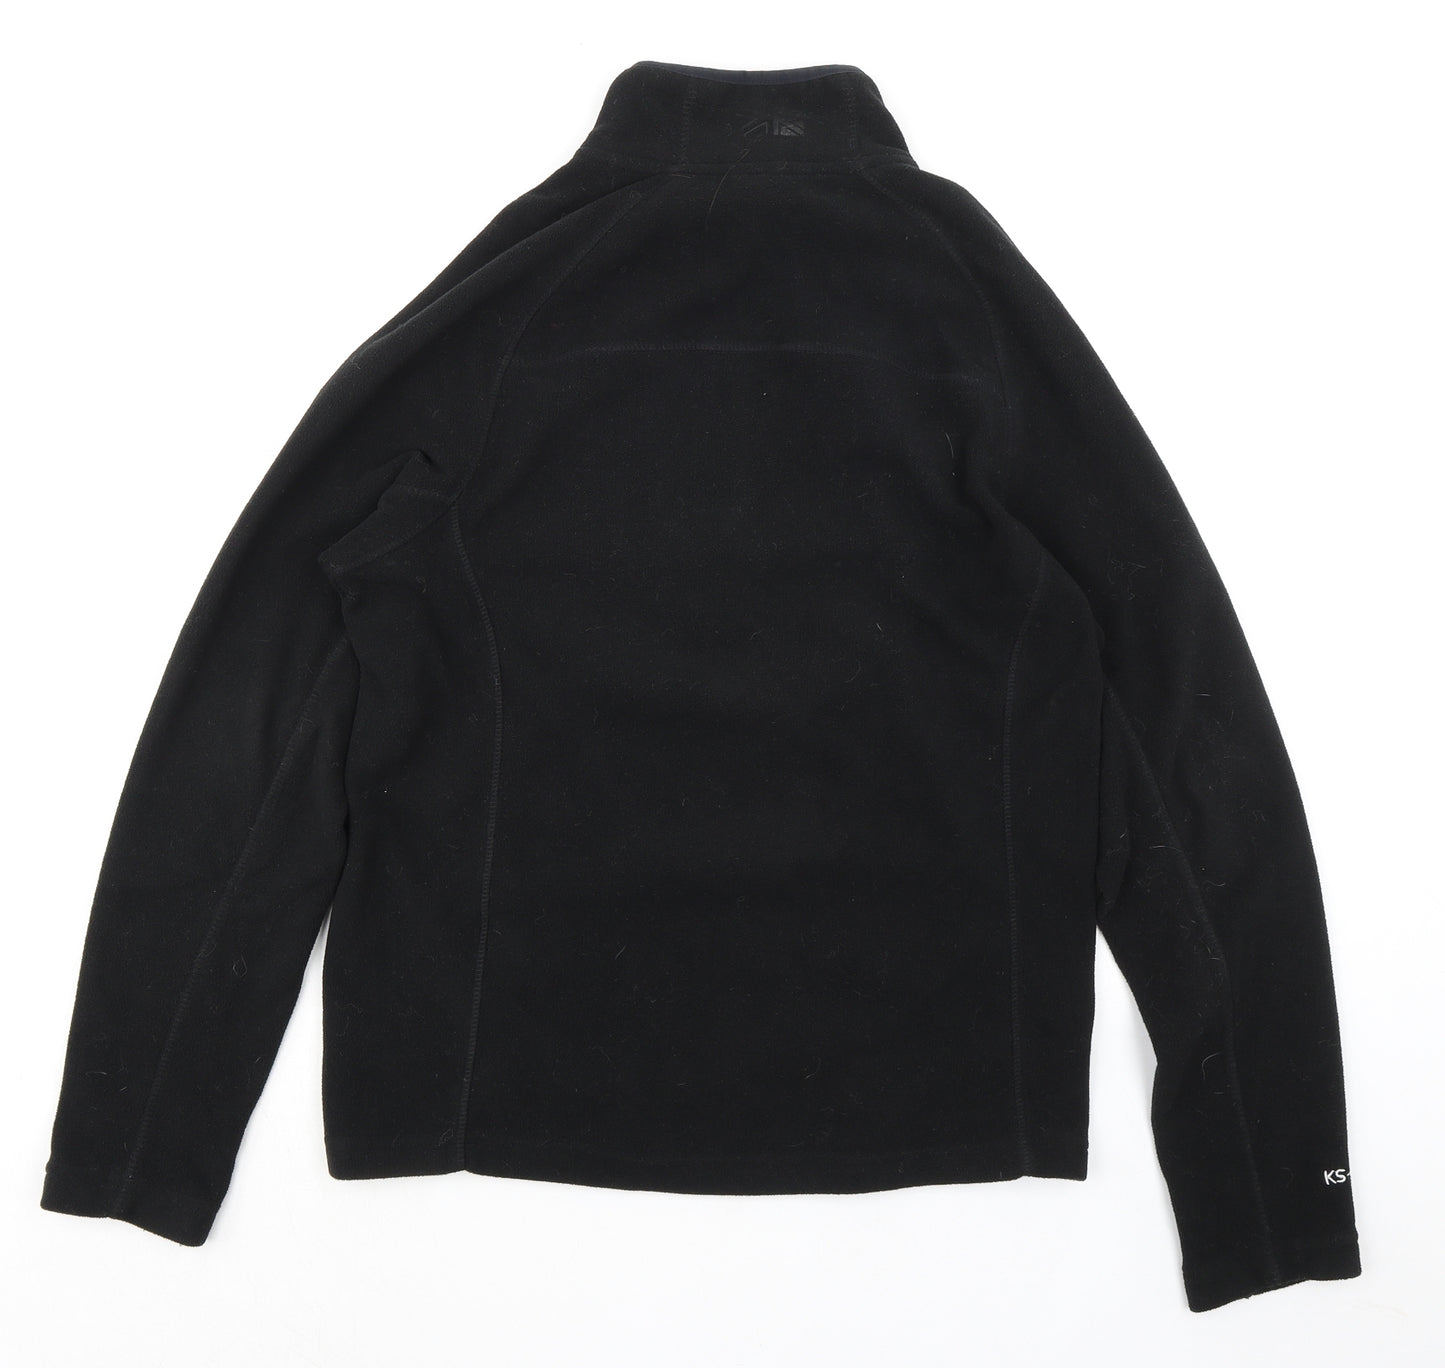 Karrimor Womens Black Polyester Pullover Sweatshirt Size XS Zip - Logo Zipped Pocket 1/4 Zip High Neck